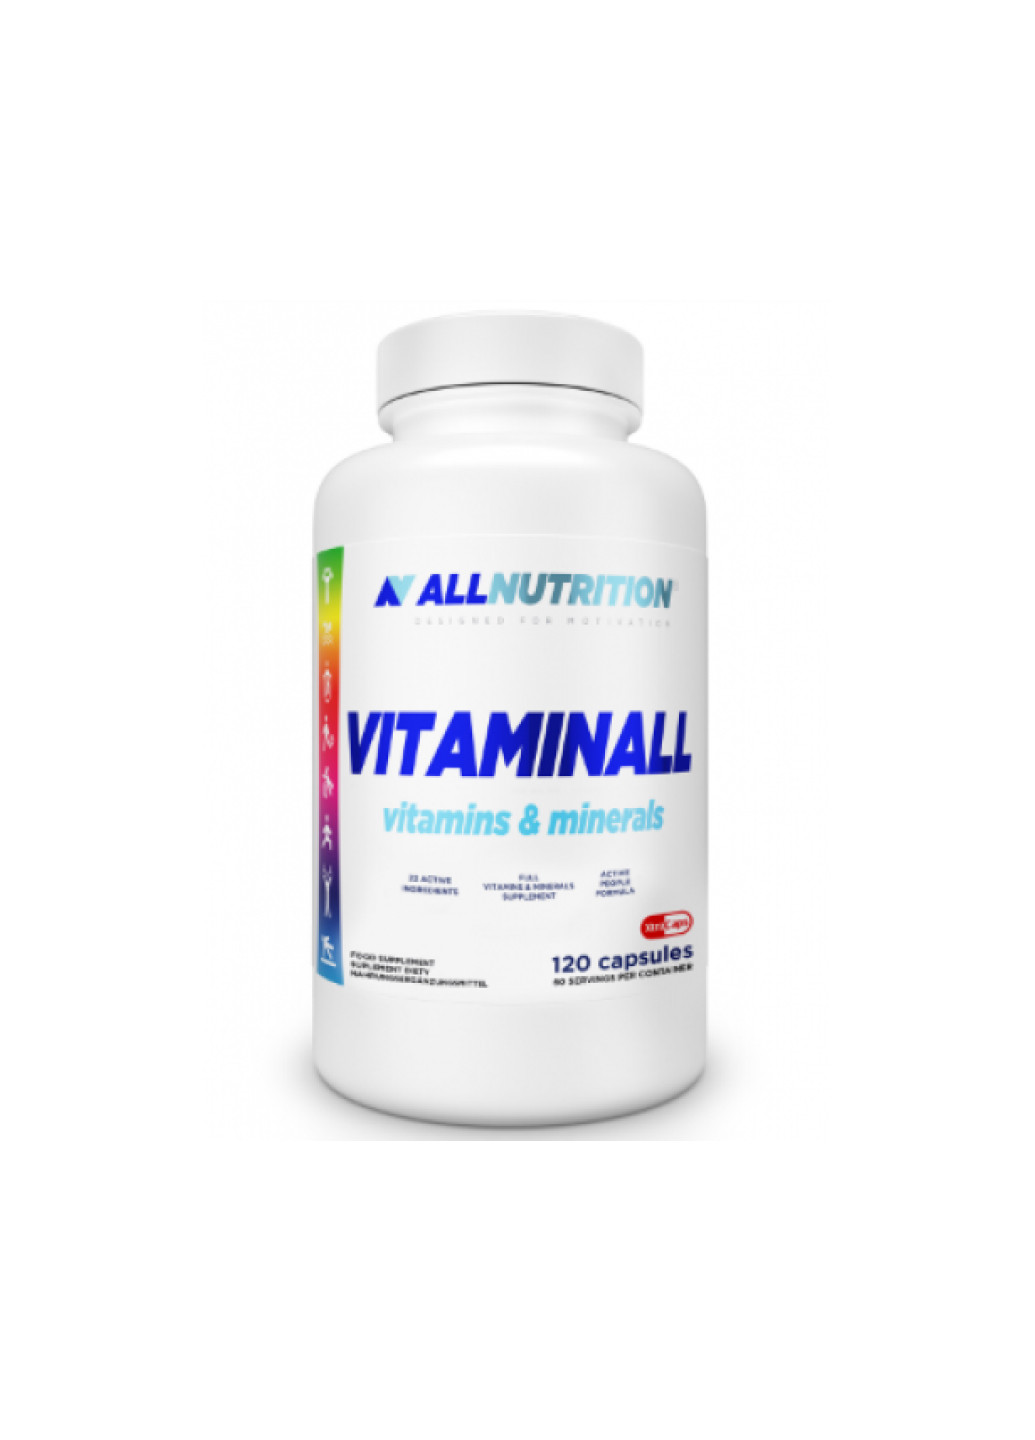 Мультивитамины для иммунной системы MAll Nutrition Vitaminall vitamins & minerals - 120 caps xtracaps Allnutrition (253541805)